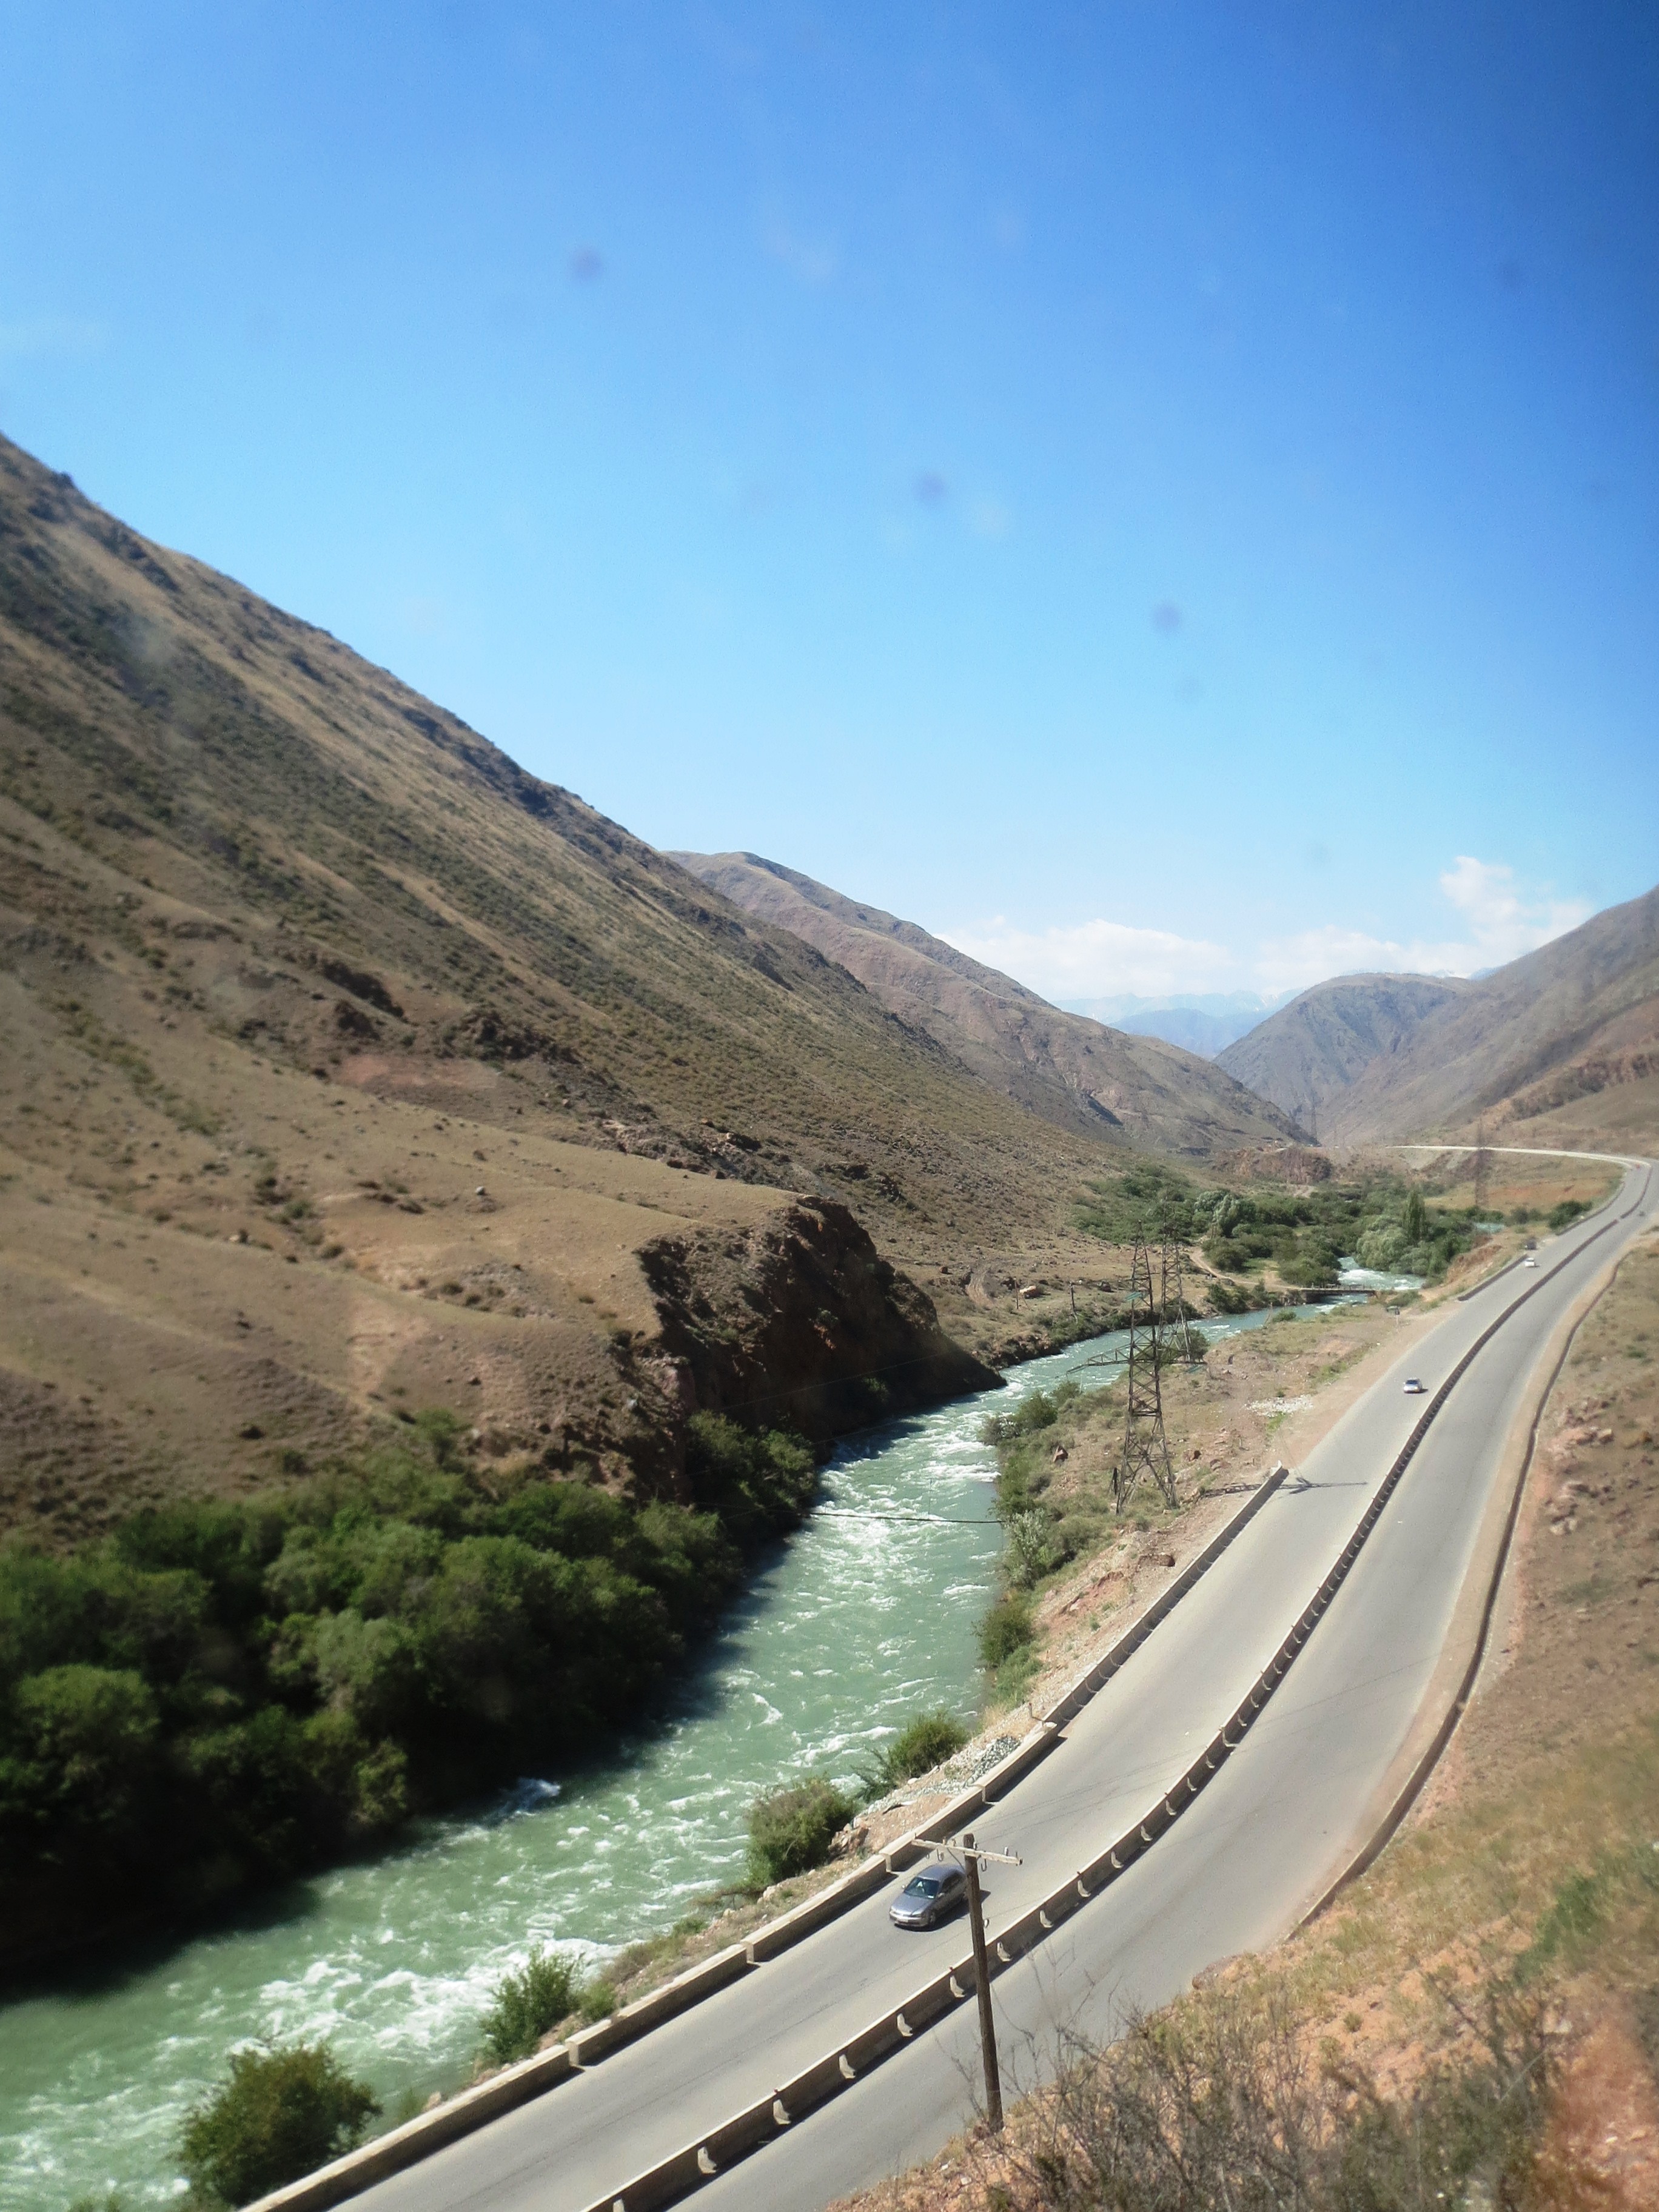 The Boom Gorgeas seen from the Bishkek-Balykchy train. Photo by Zukhra Iakupbaeva.